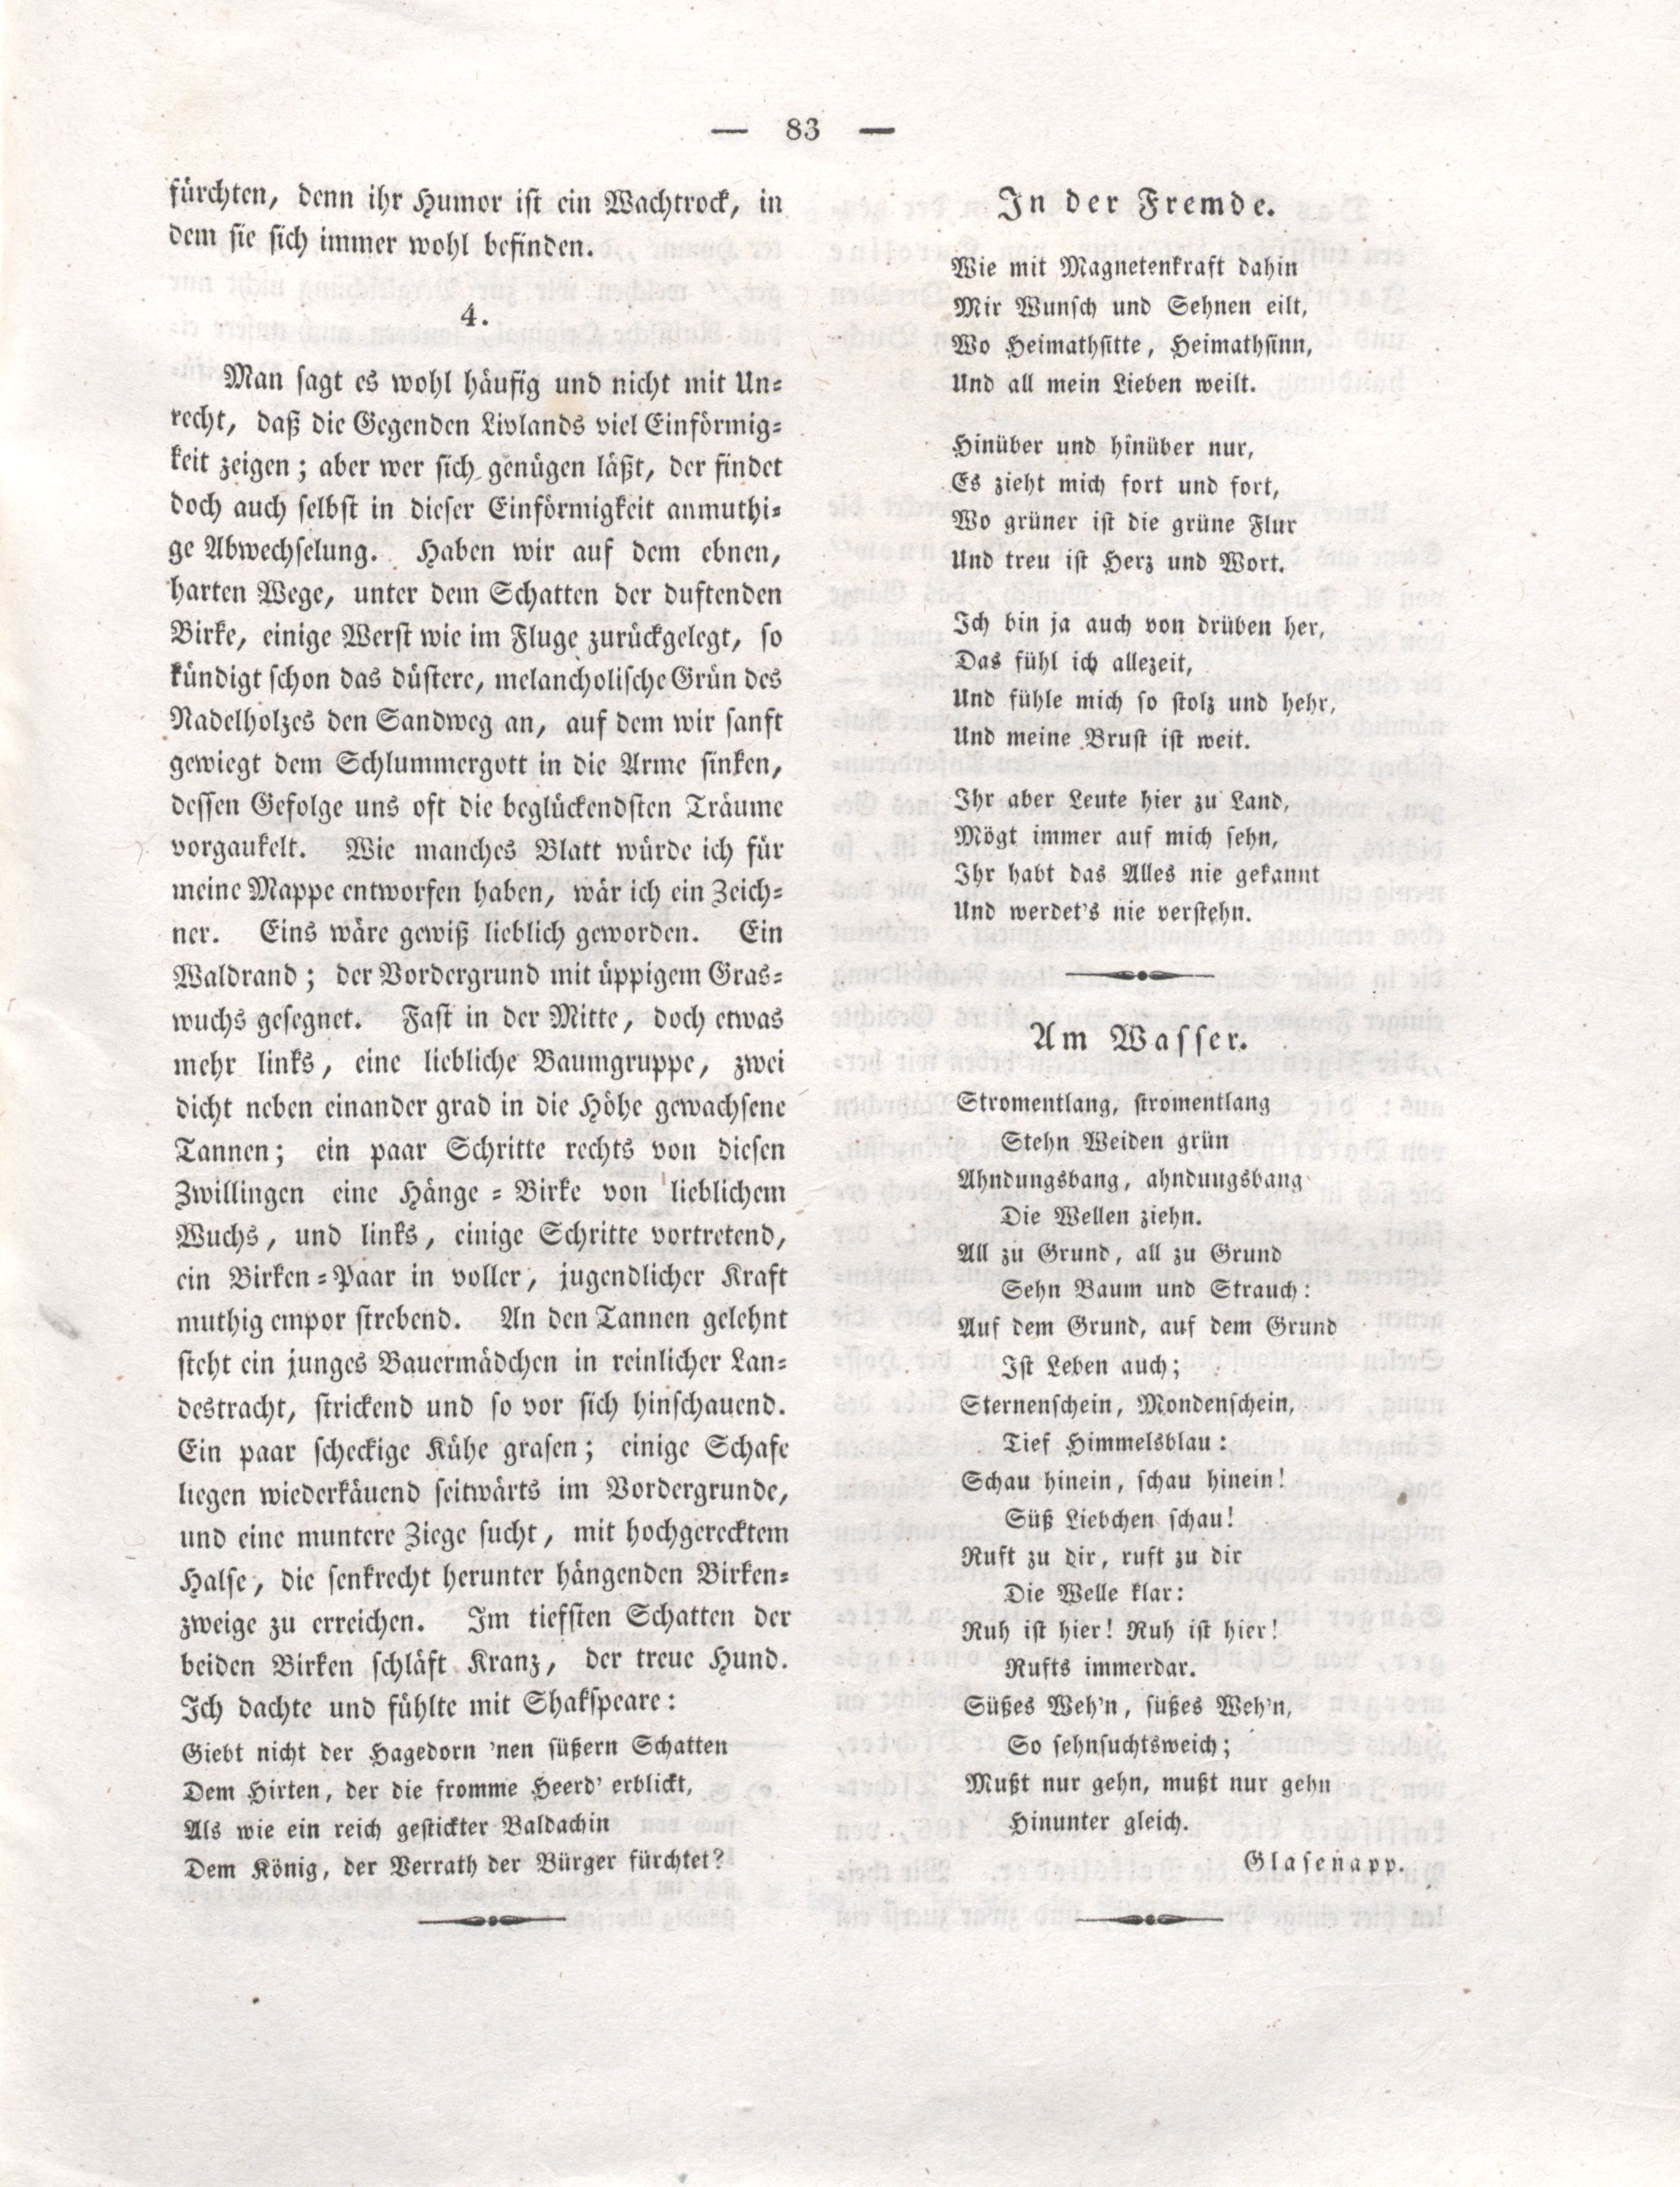 In der Fremde (1836) | 1. (83) Основной текст